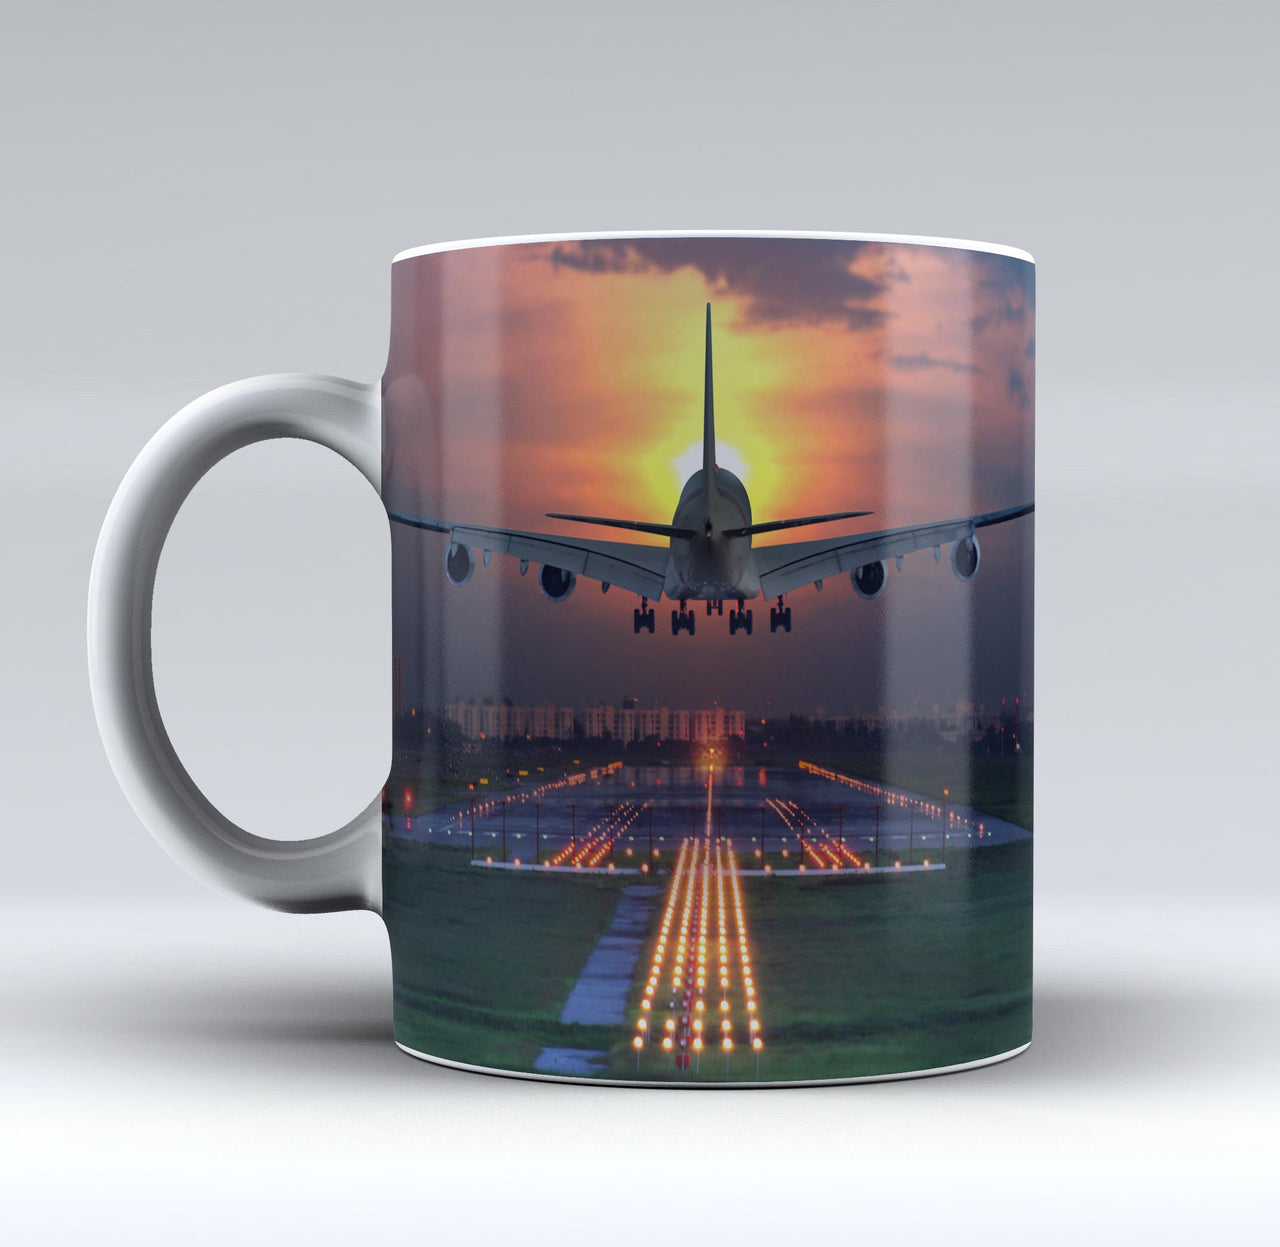 Super Boeing 747 Landing During Sunset Designed Mugs